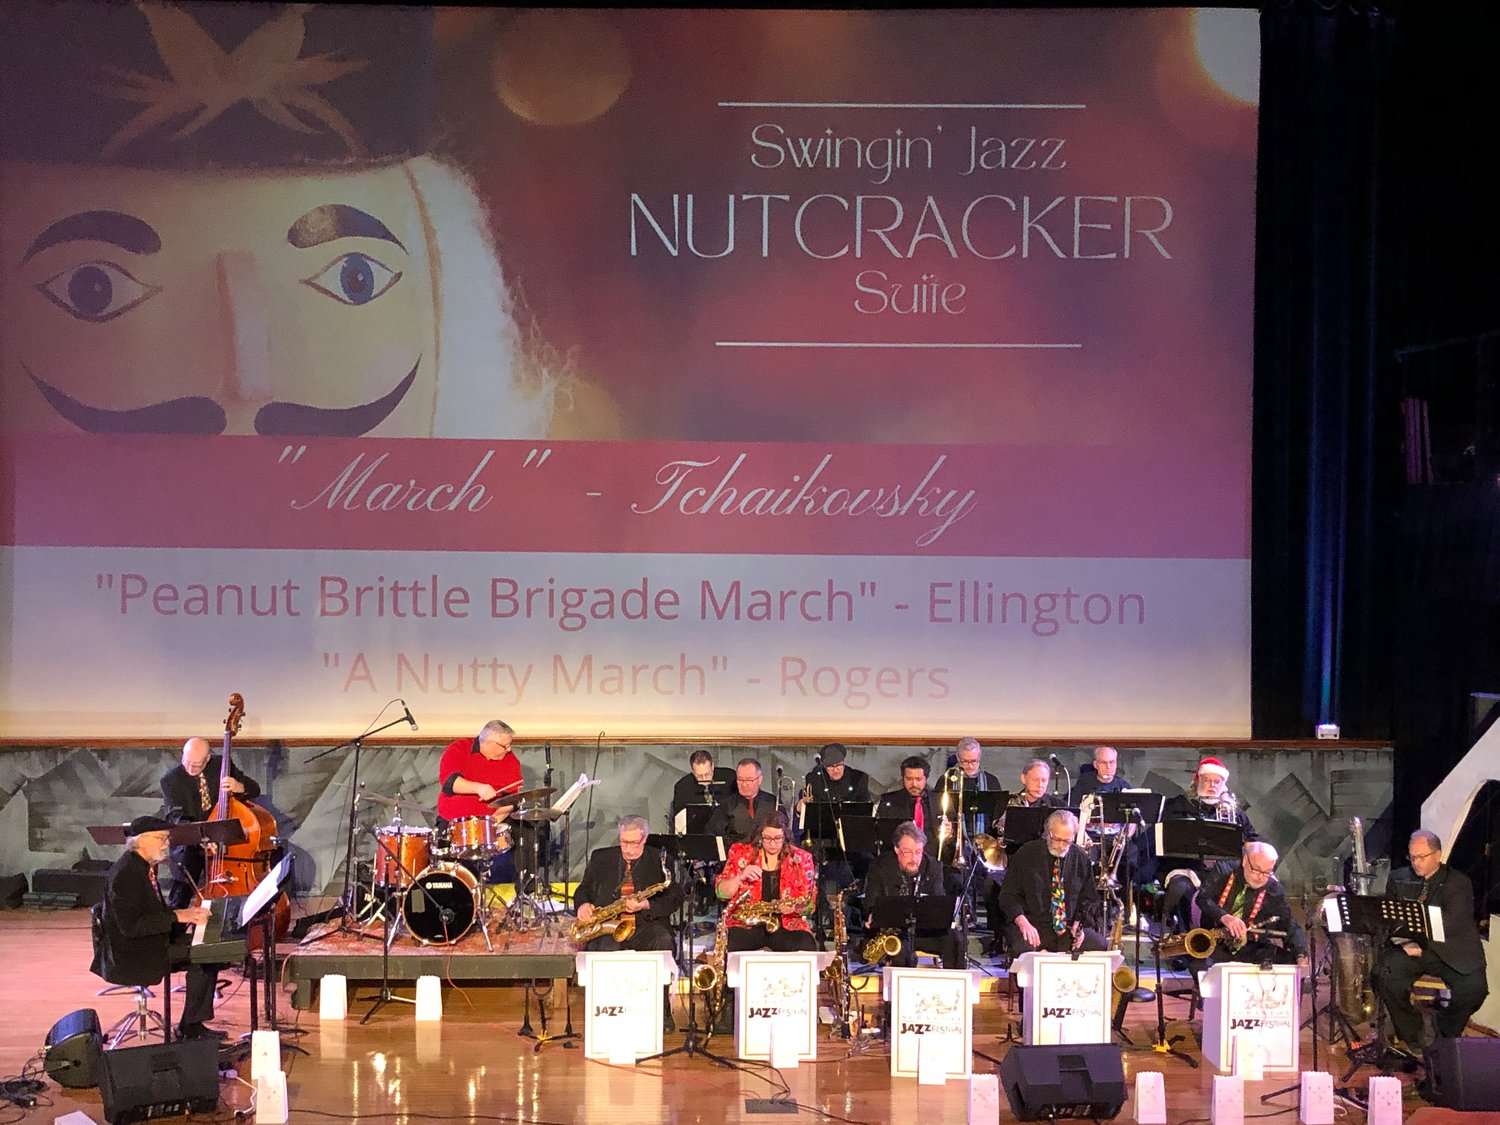 The Swingin' Jazz Nutcracker Suite will perform on Sunday, November 27.